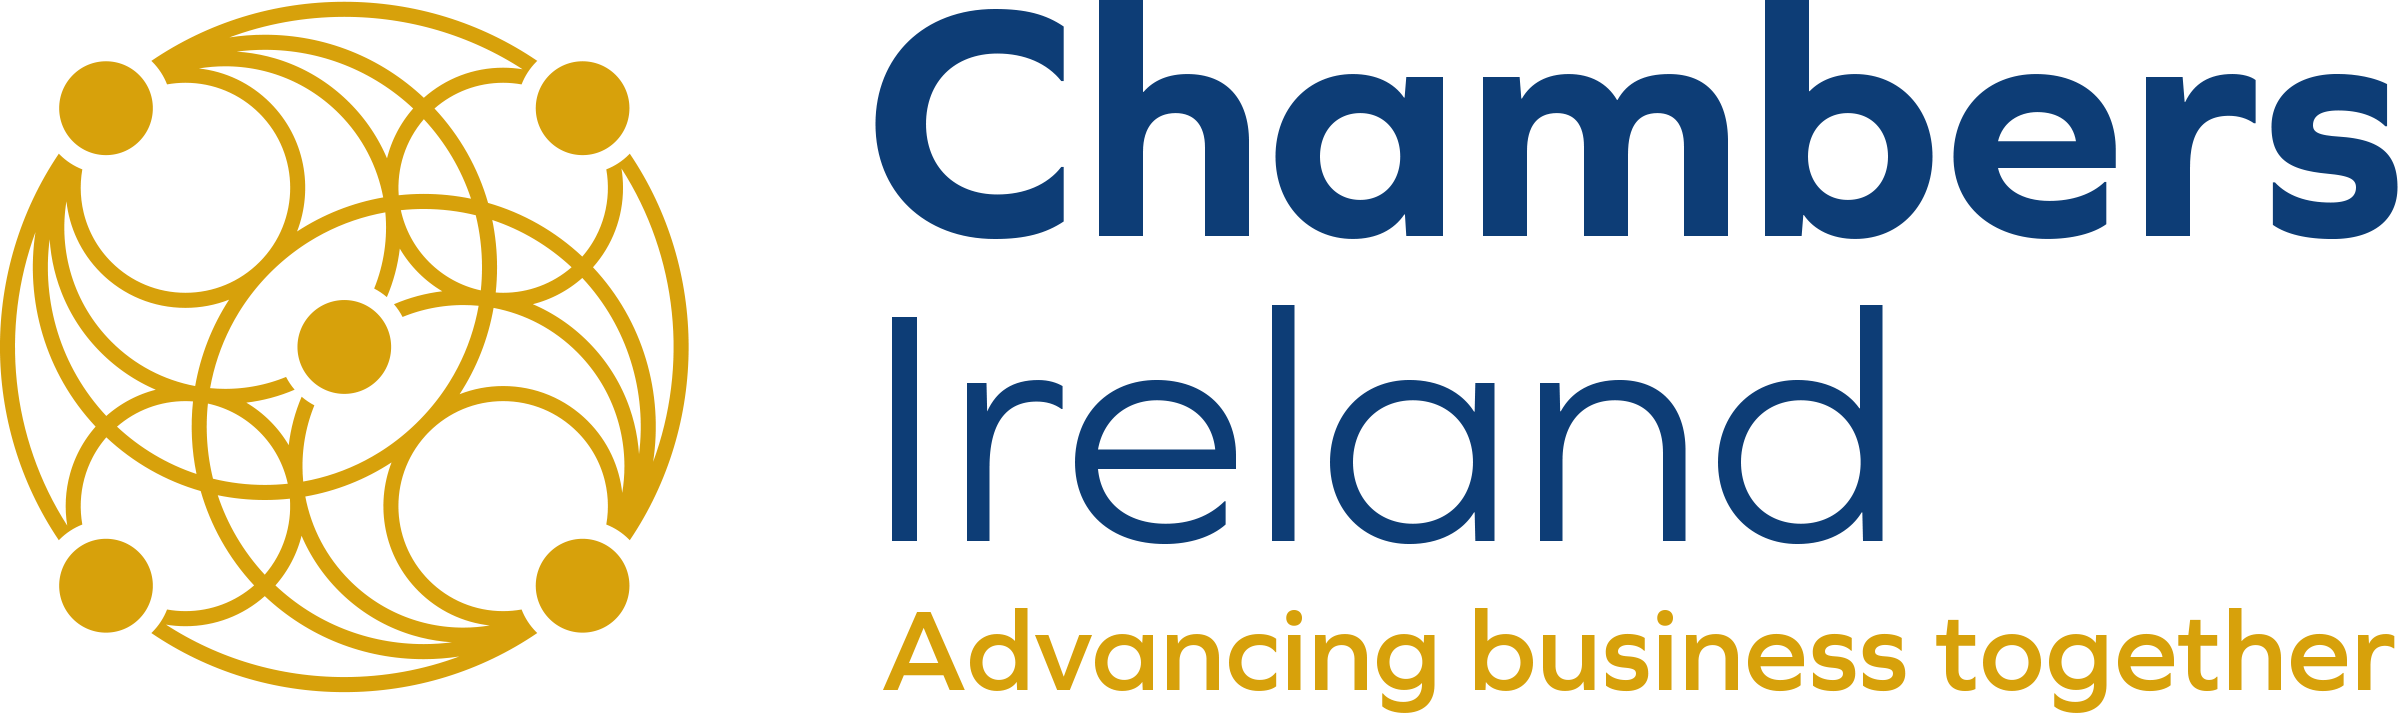 Chambers-Ireland-Tagline